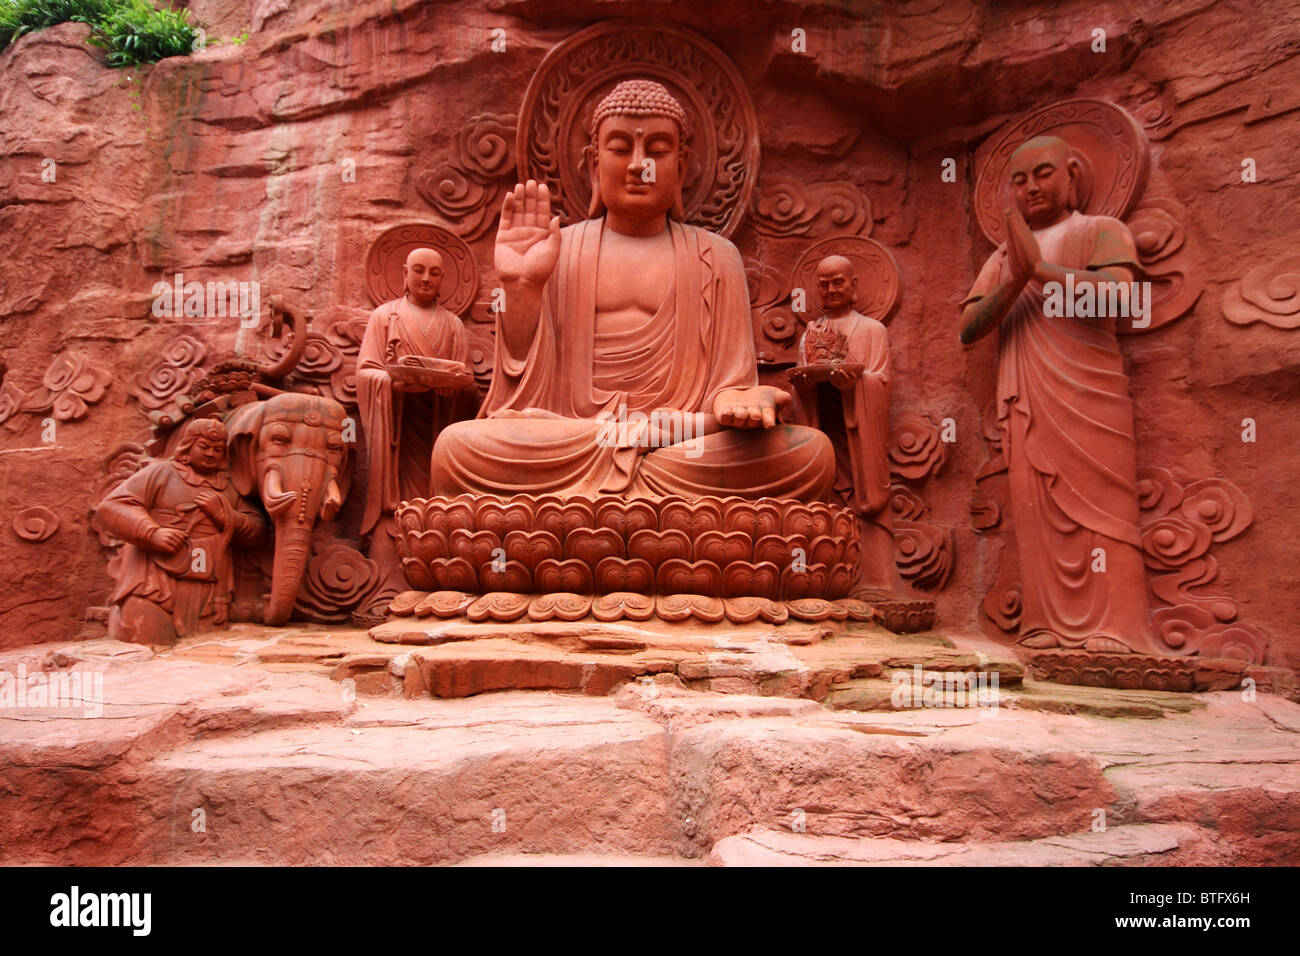 Buddha statue in Emei Shan Mountains, China Stock Photo